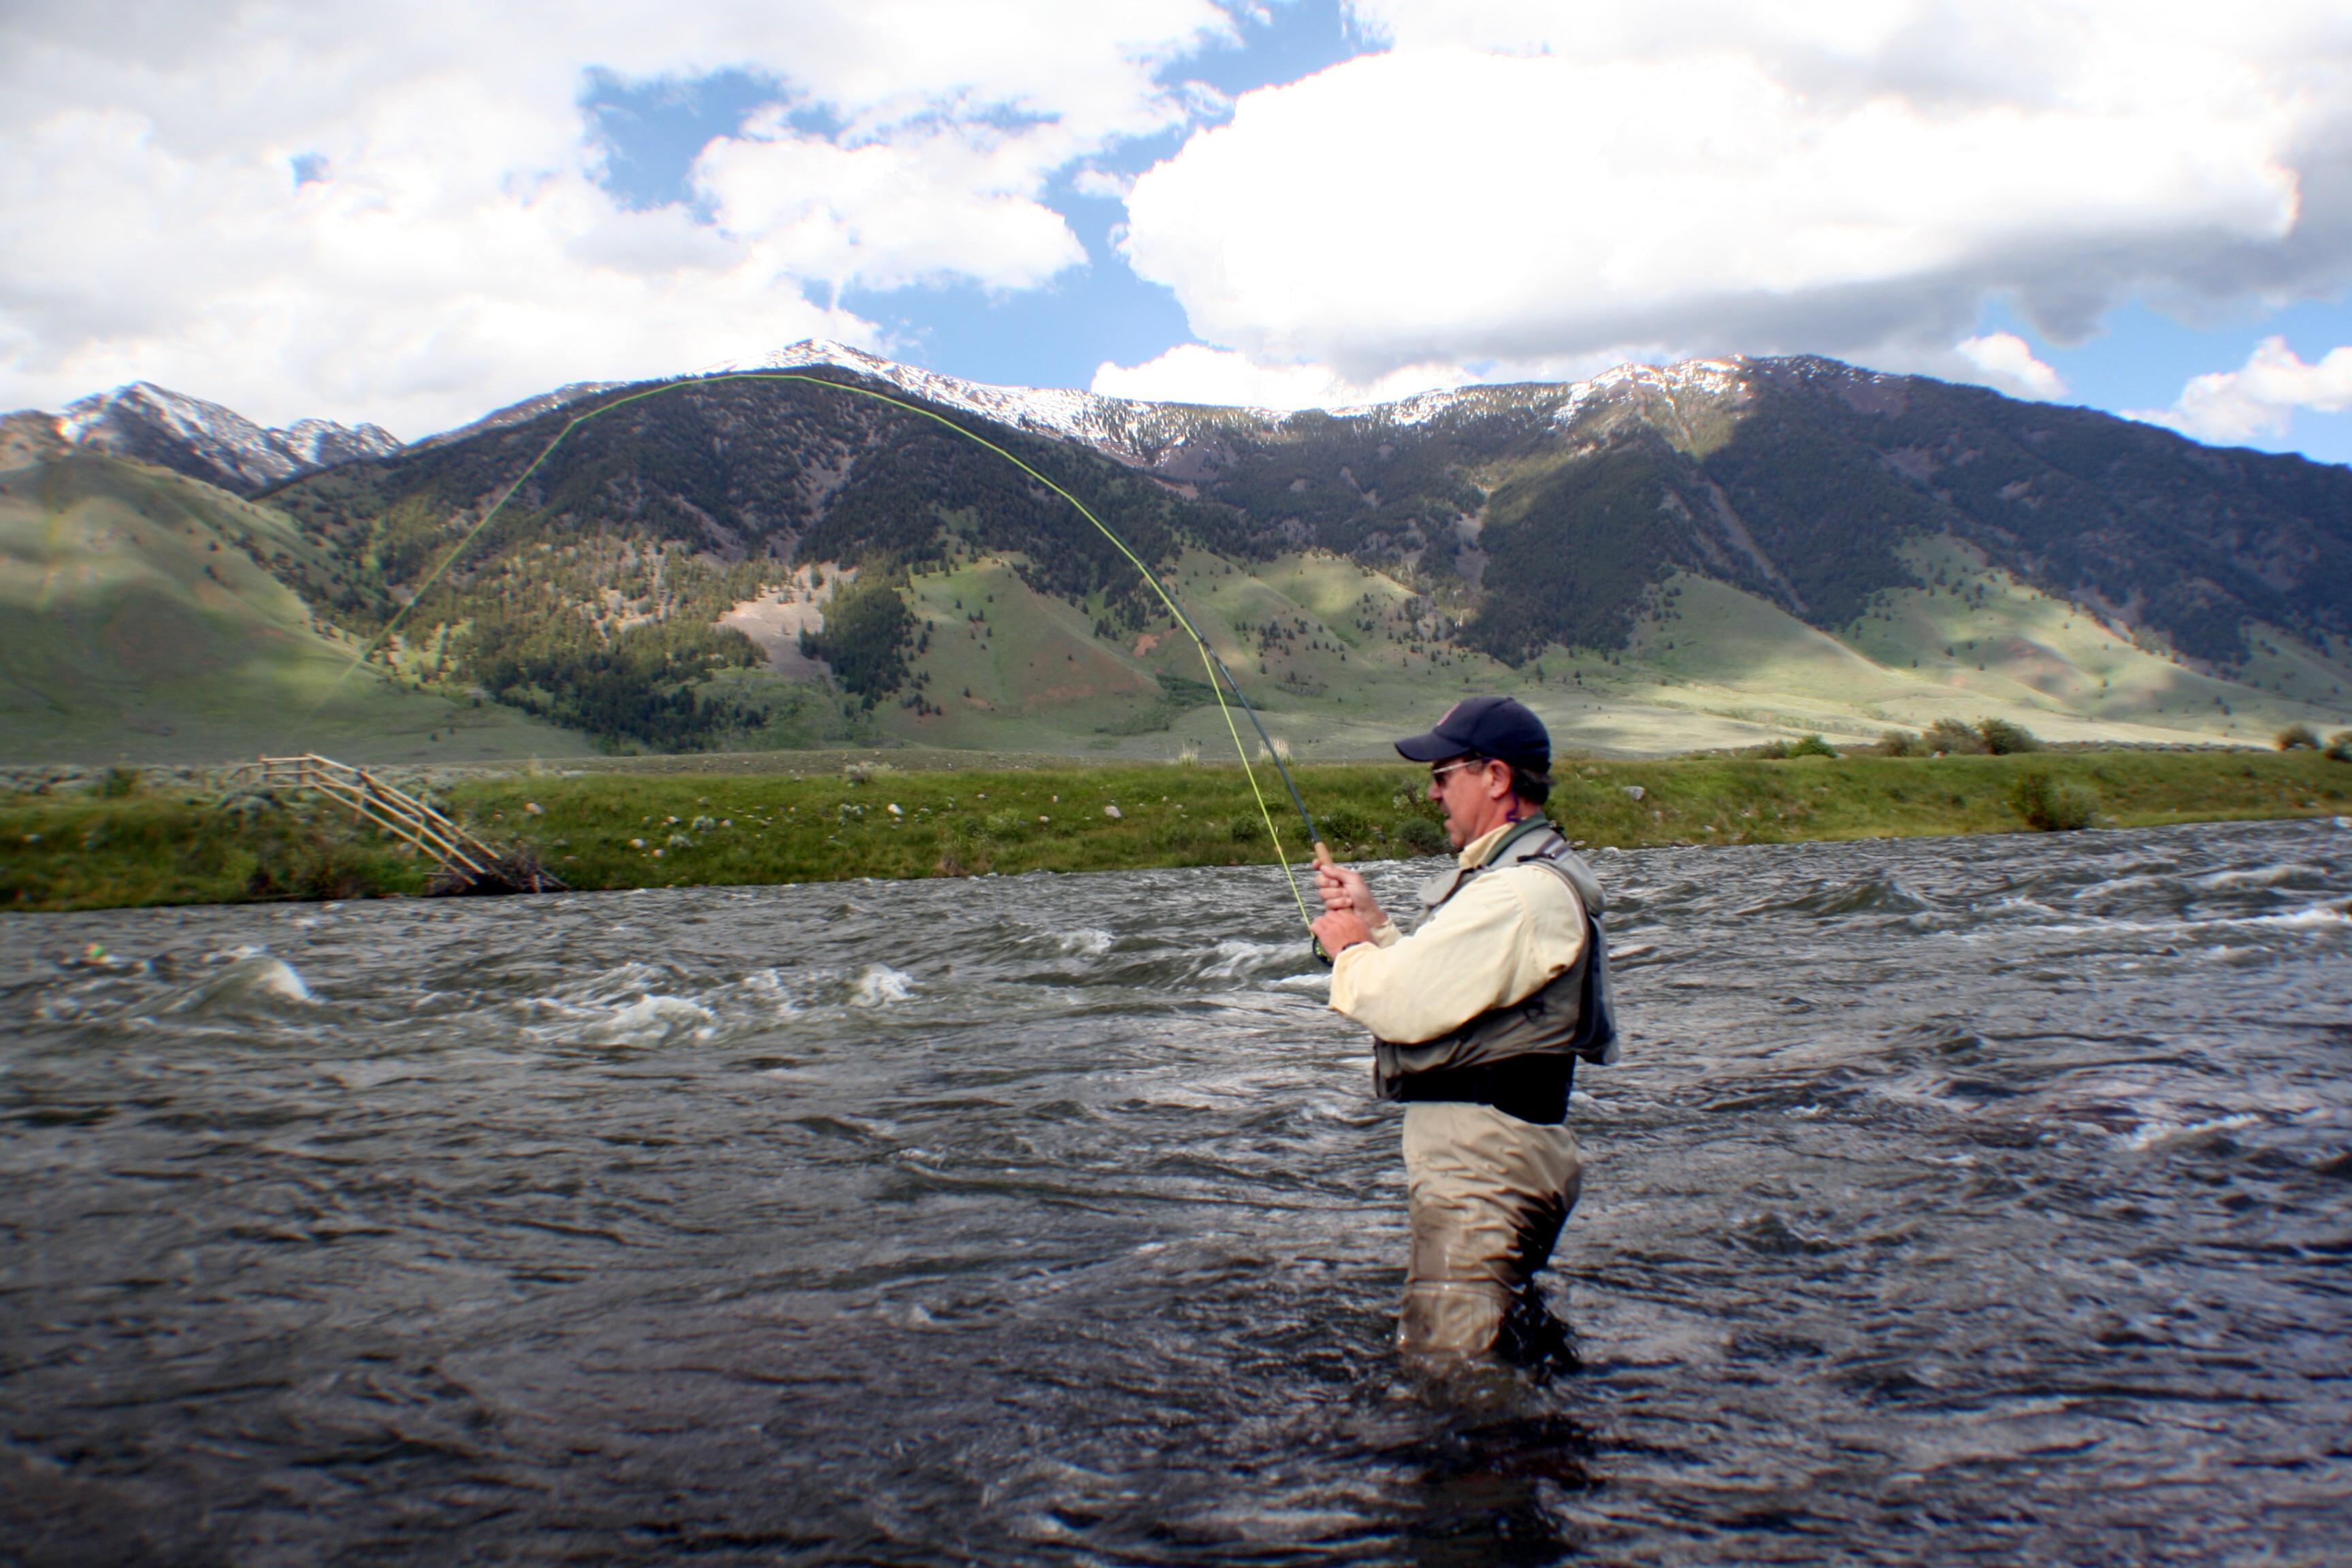 Seam Fishing / Michael Gorman photo / McKnzie river fishing guide